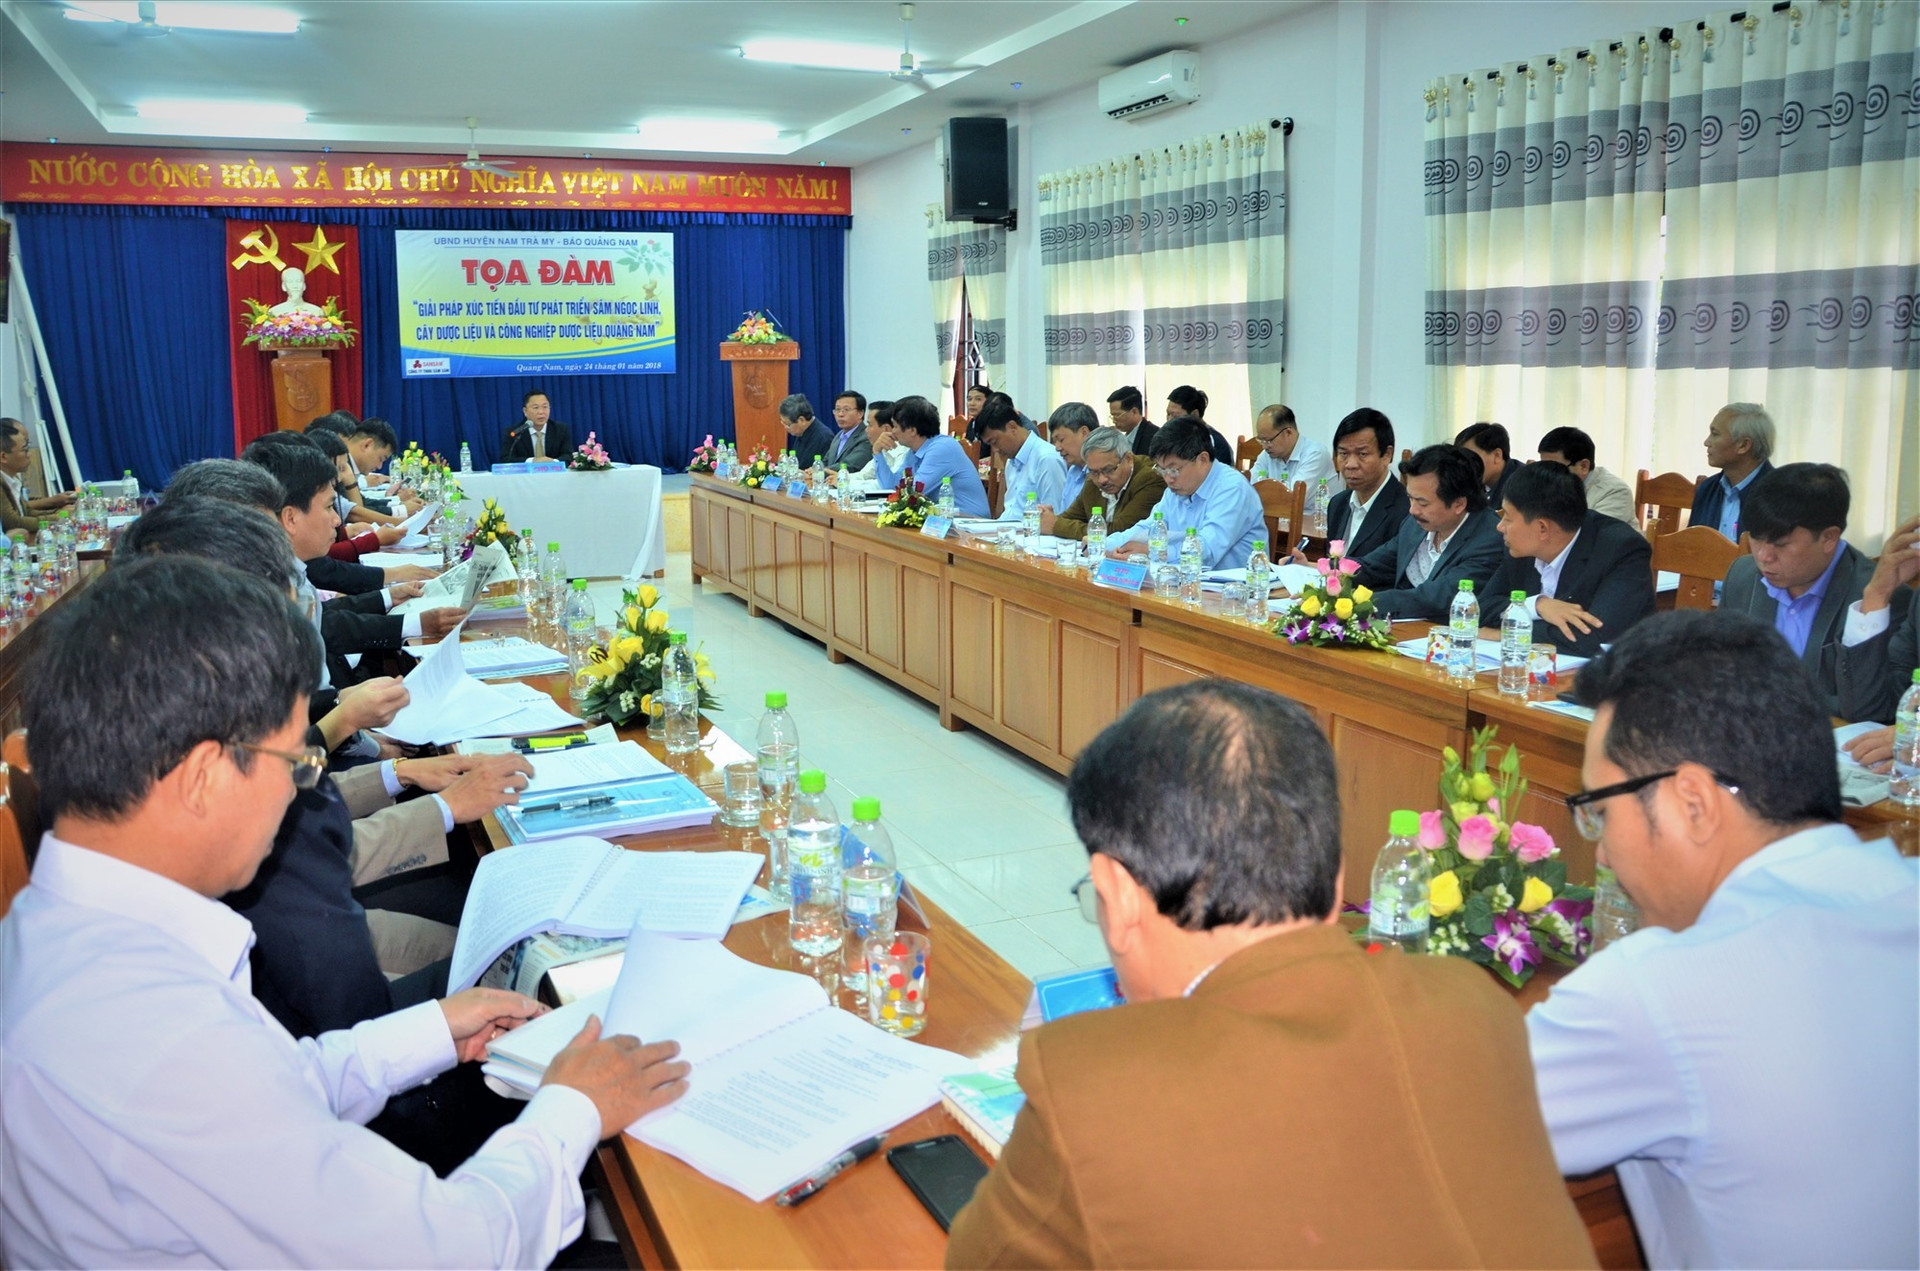 A seminar on Ngoc Linh ginseng in Quang Nam province